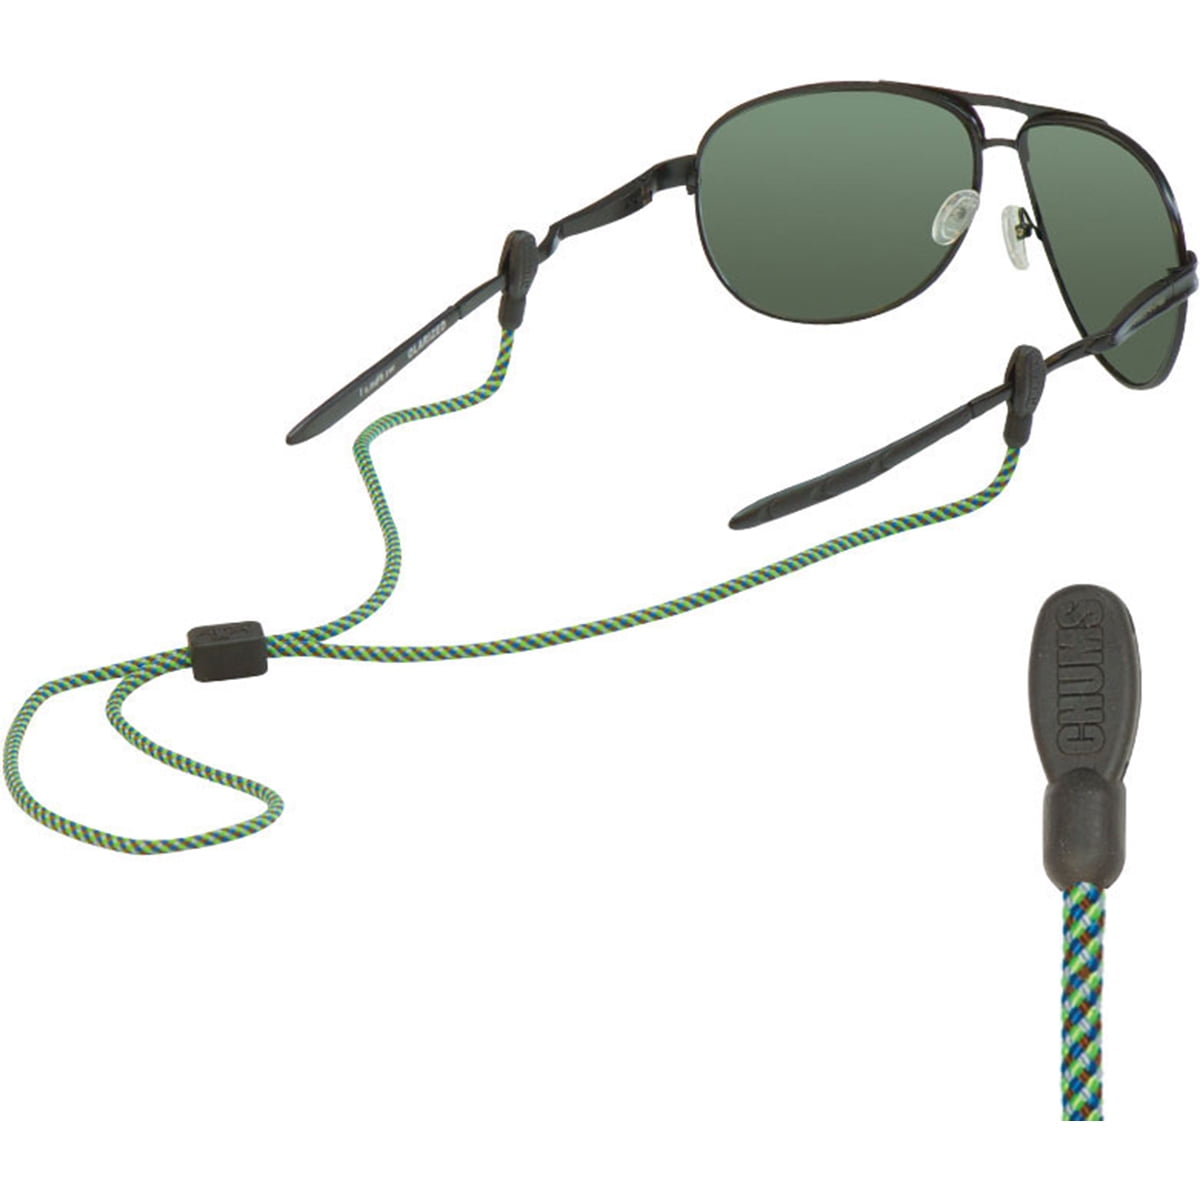 Chums Slip Fit Adjustable Nylon Rope Sunglasses Eyewear Retainer ...